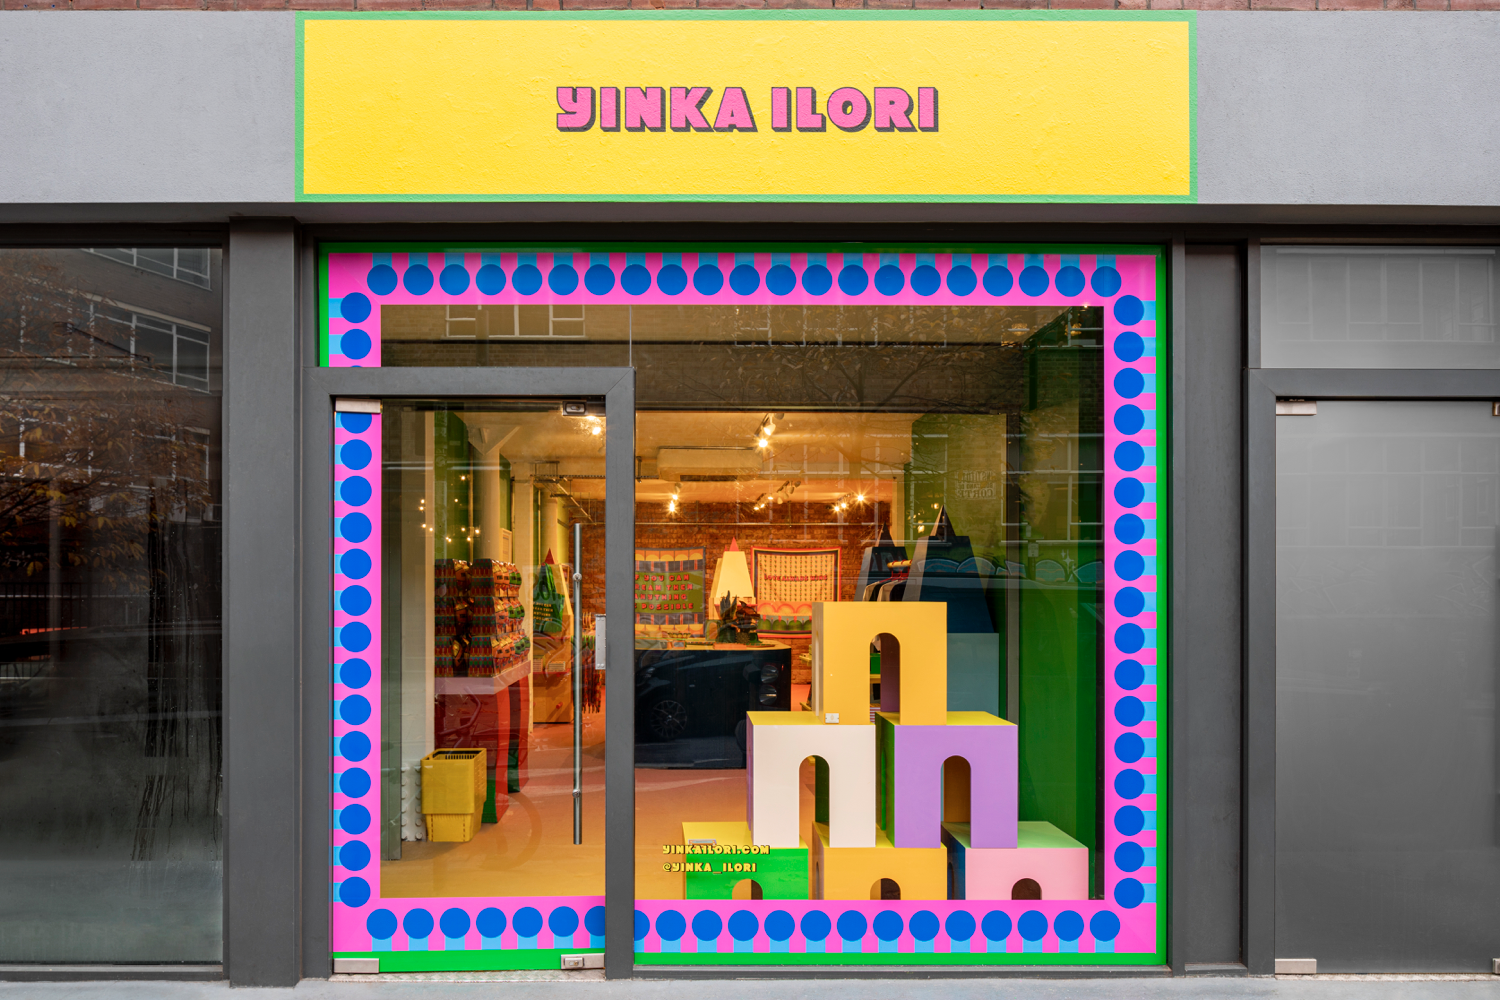 Yinka Ilori's kaleidoscopic pop-up shop injects playfulness back into the  high street